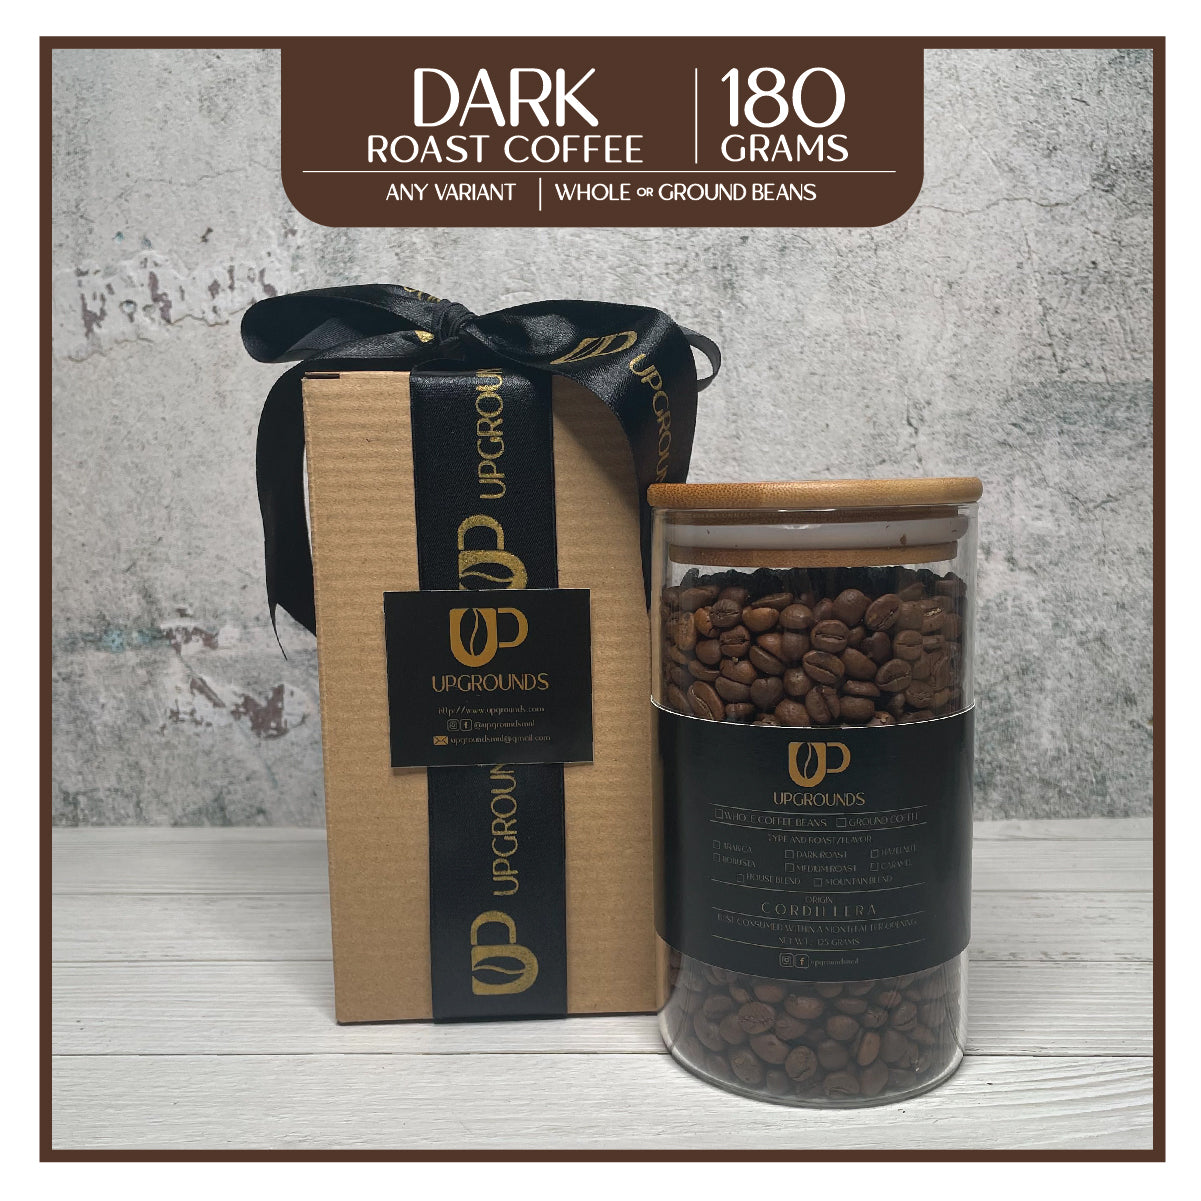 Dark Roast Coffee in Small Jar | Upgrounds Edit alt text